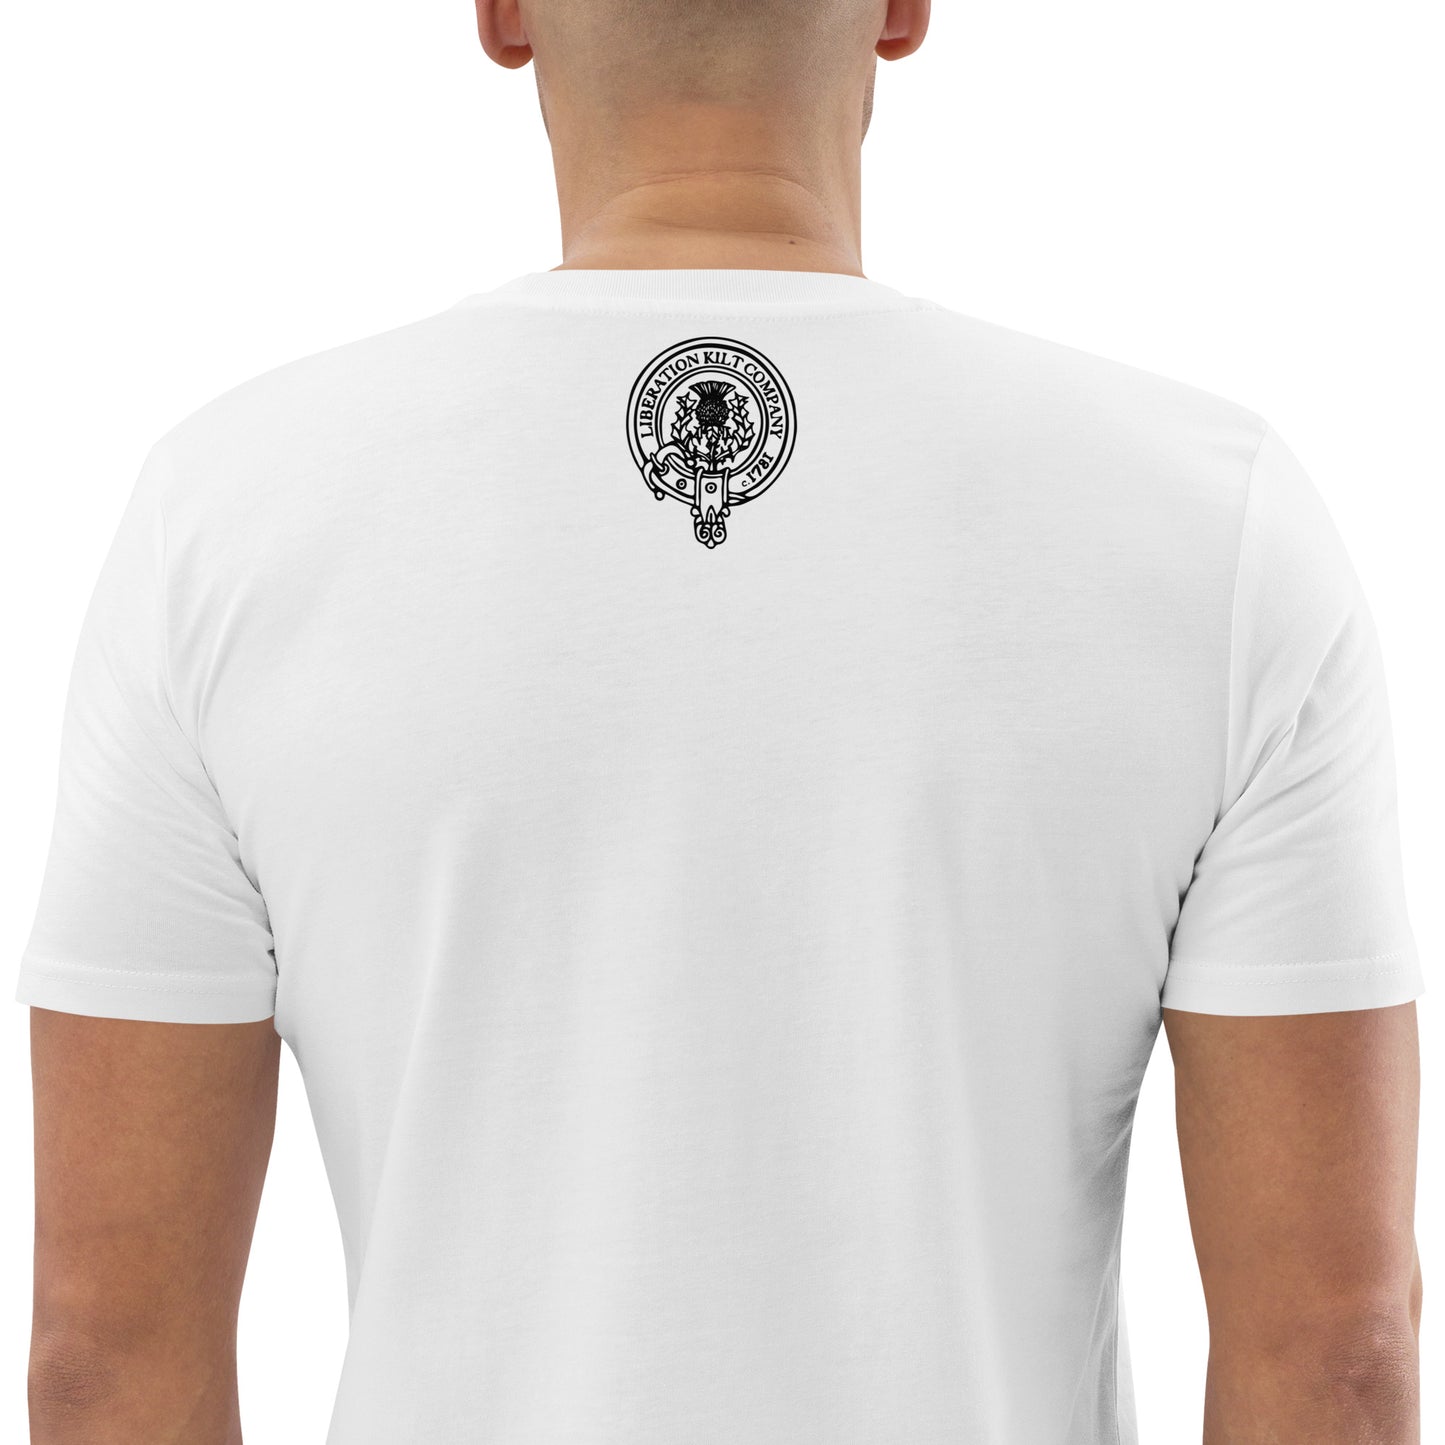 LiberationKilt: 'Skelton in the Wilderness' Organic White/Military Unisex T-Shirt with Black Illustration